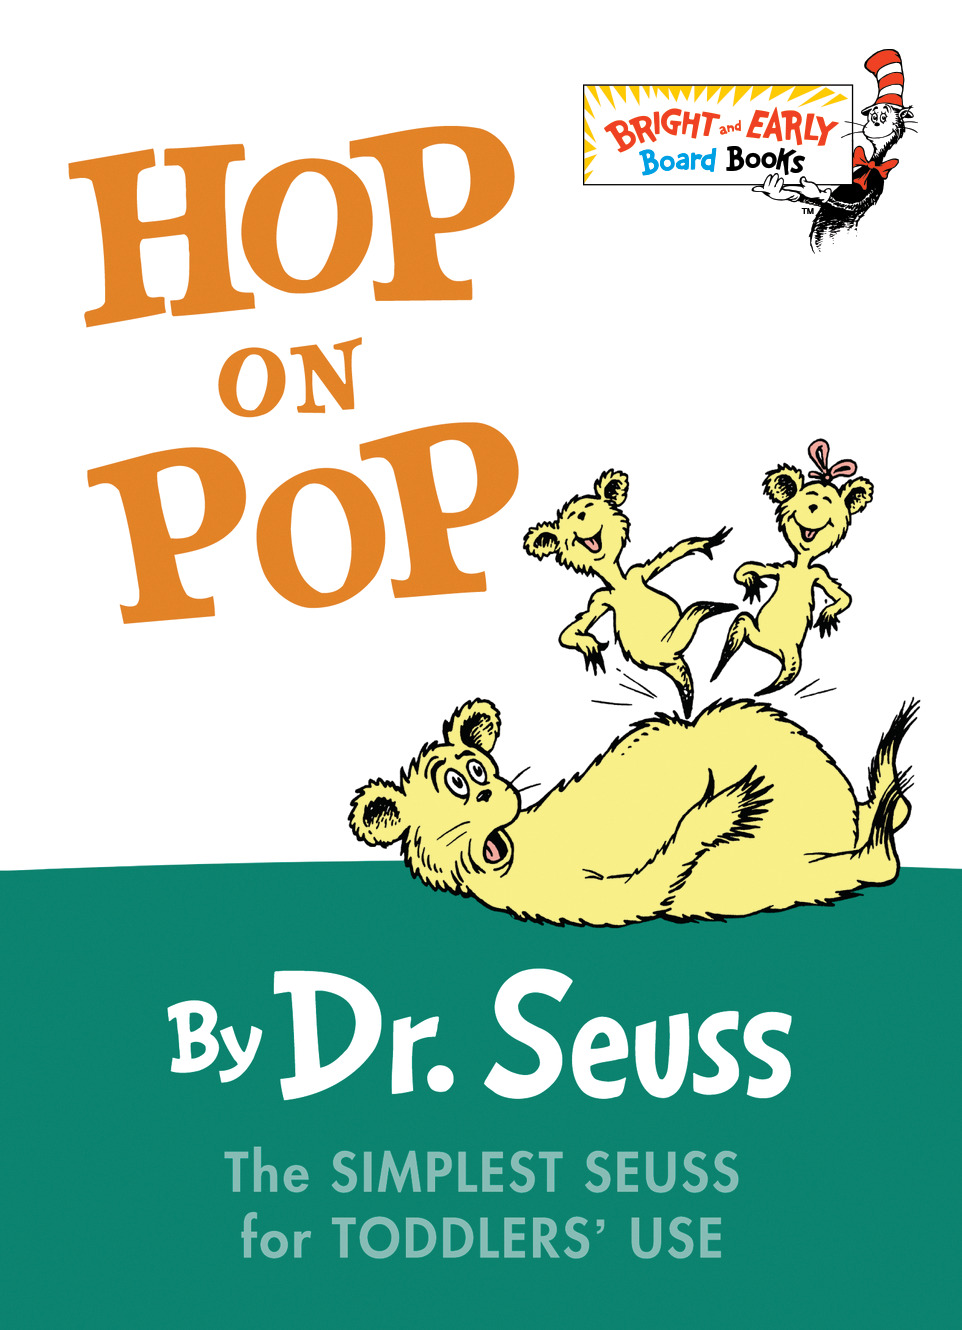 Hop on Pop | Dr. Seuss